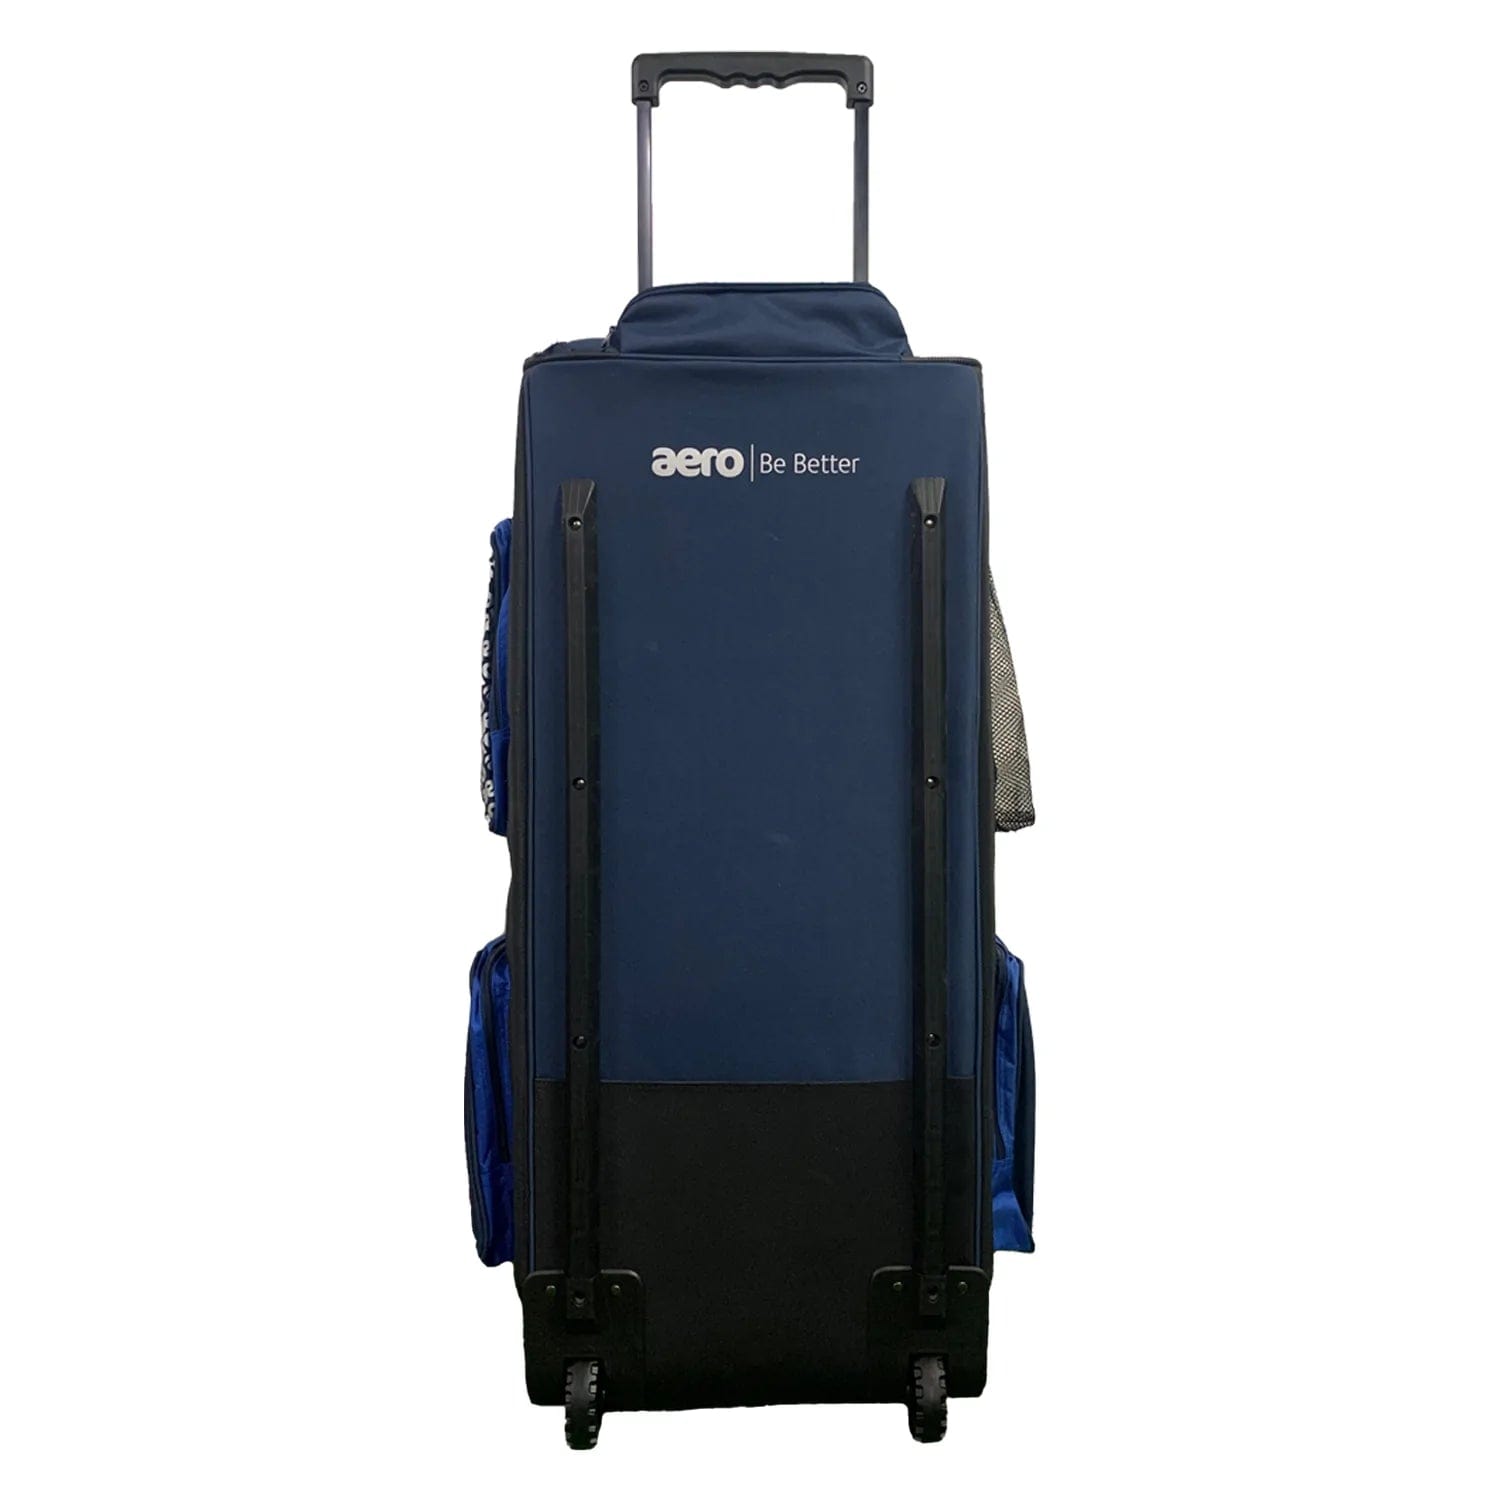 Aero Cricket Bags Blue Aero Stand Up Tour Bag